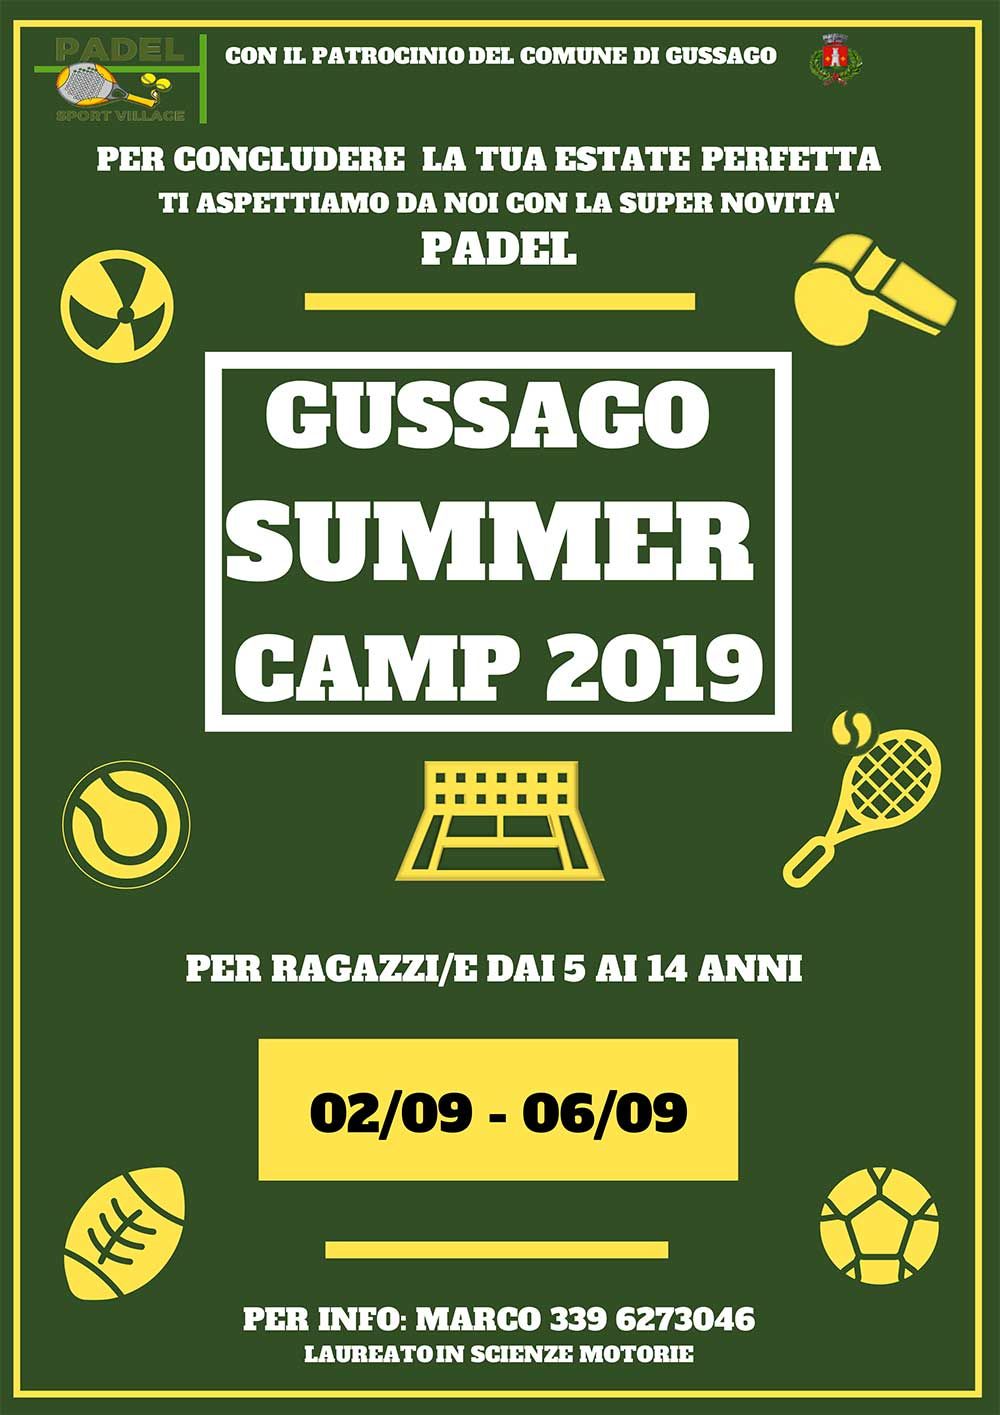 Gussago-summer-camp-padel-2019-1